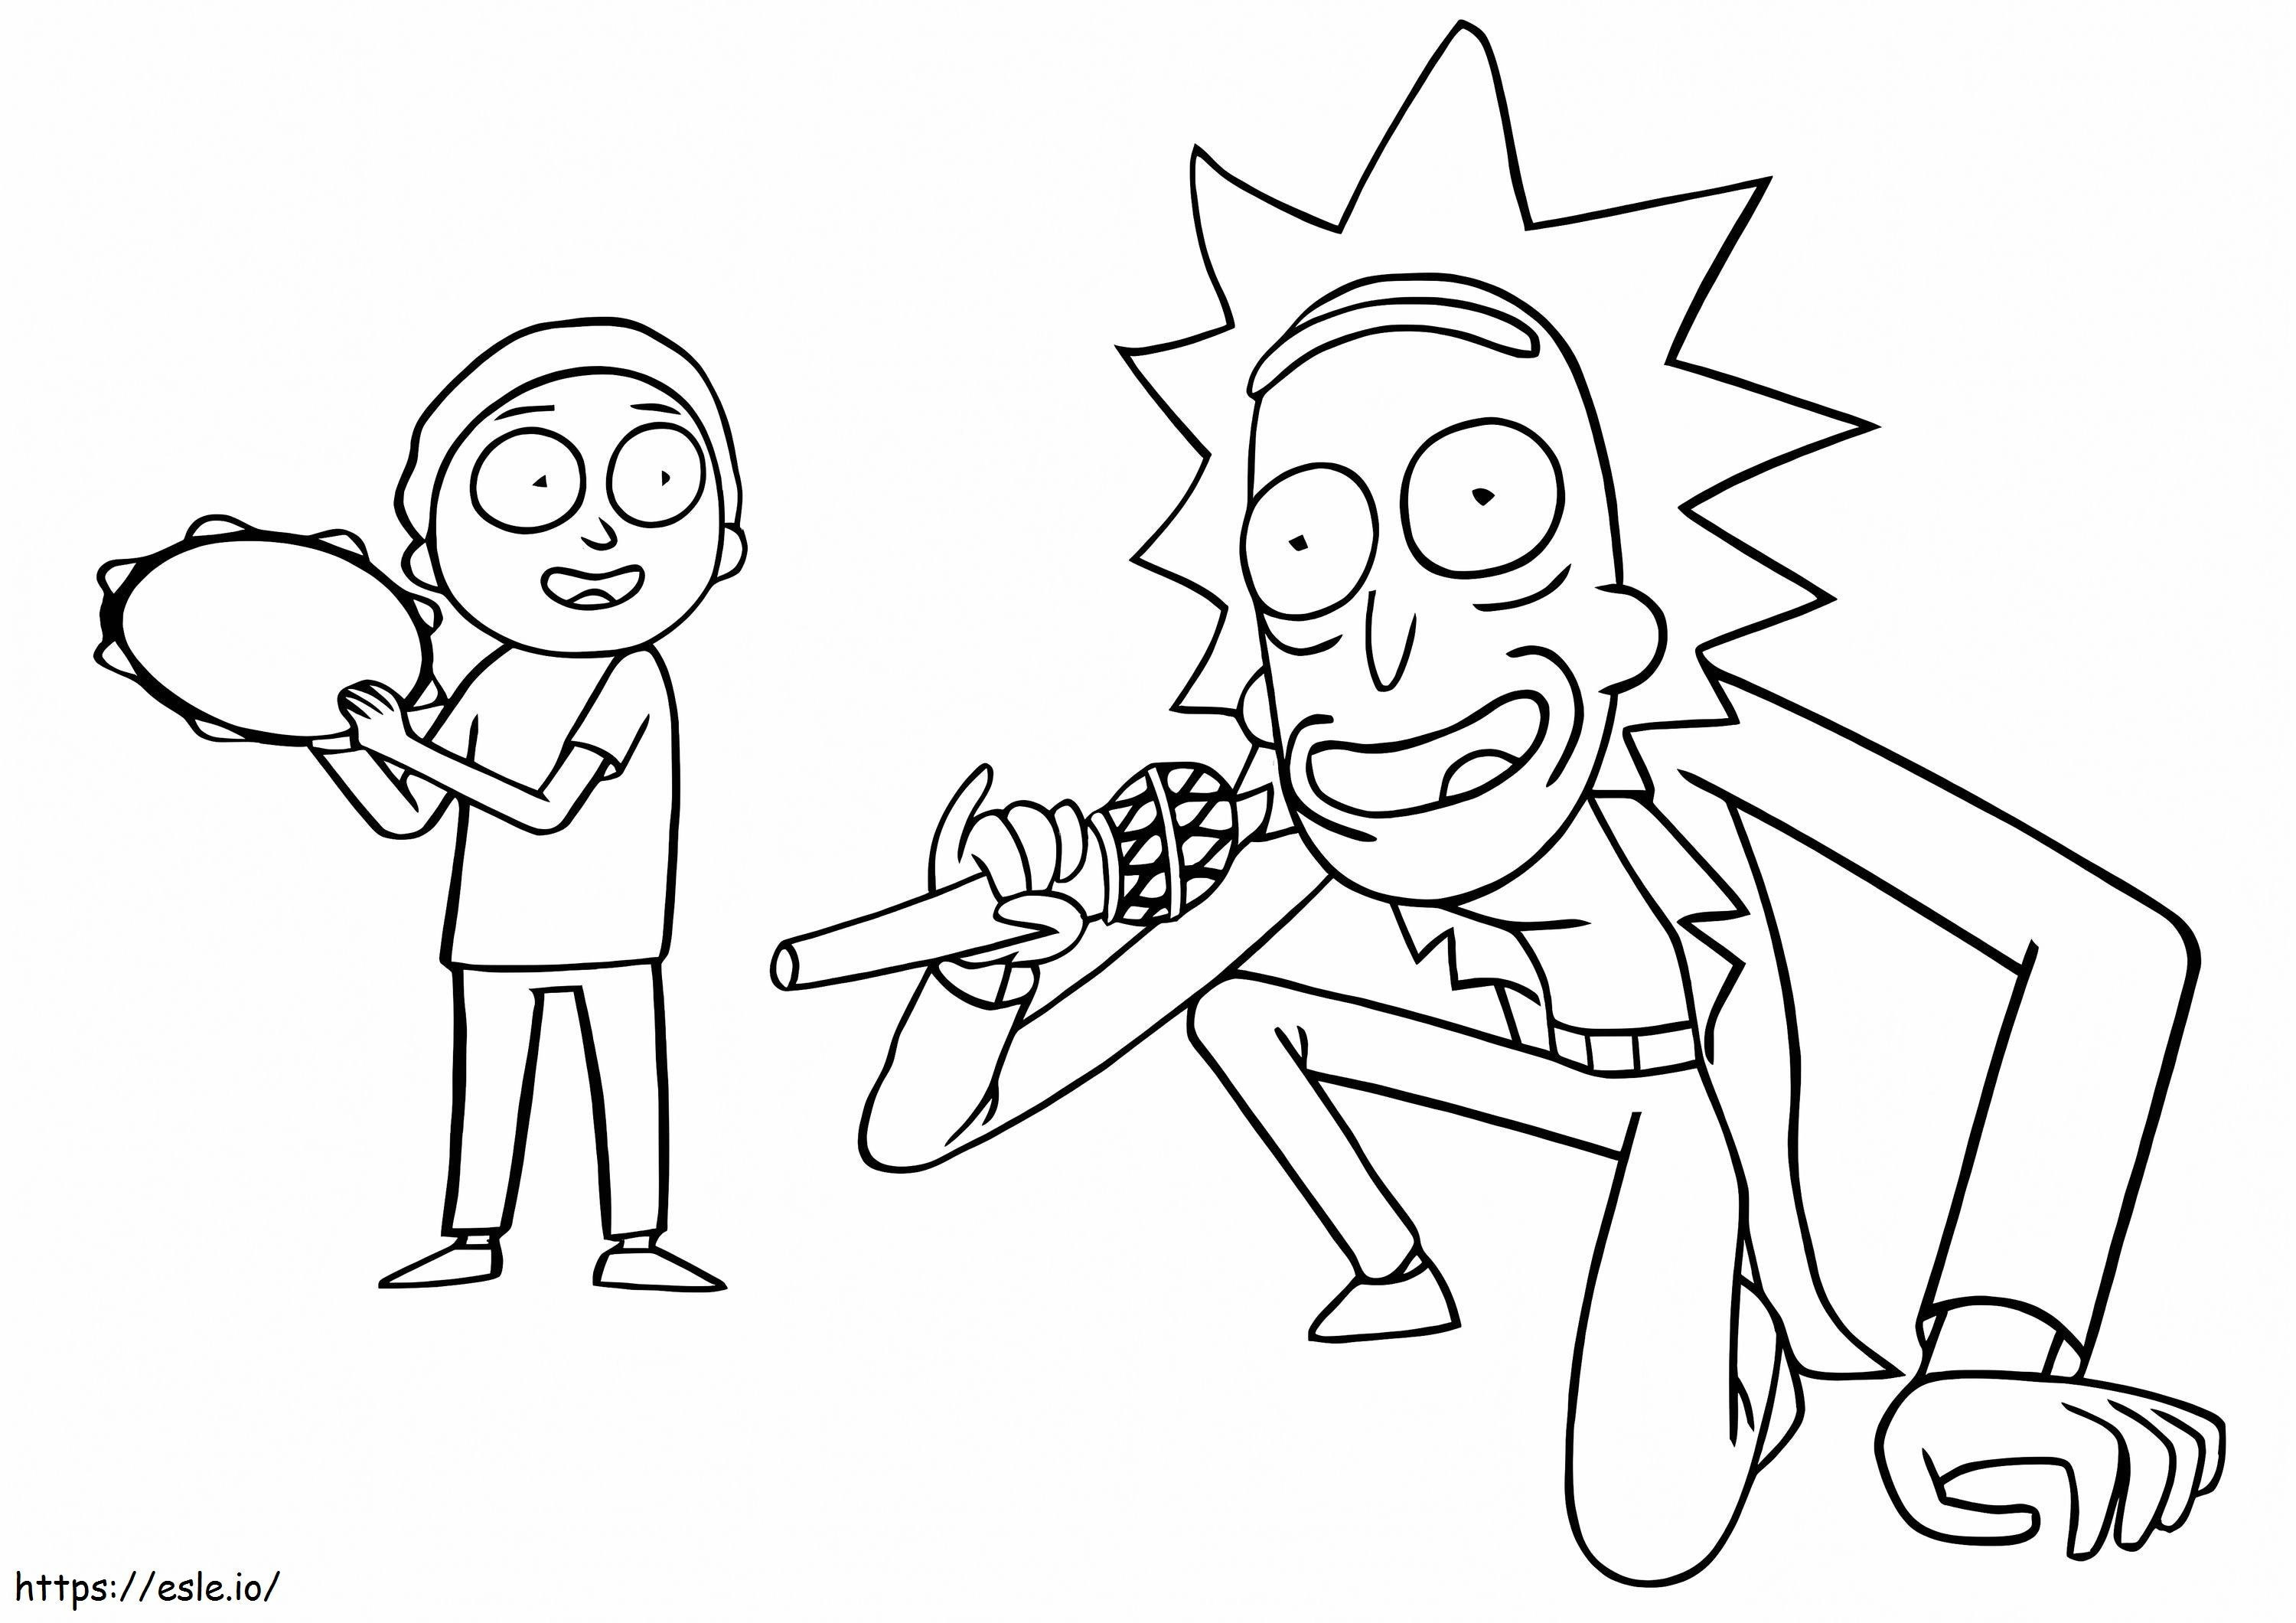 Rick Sanchez și Morty cântând de colorat